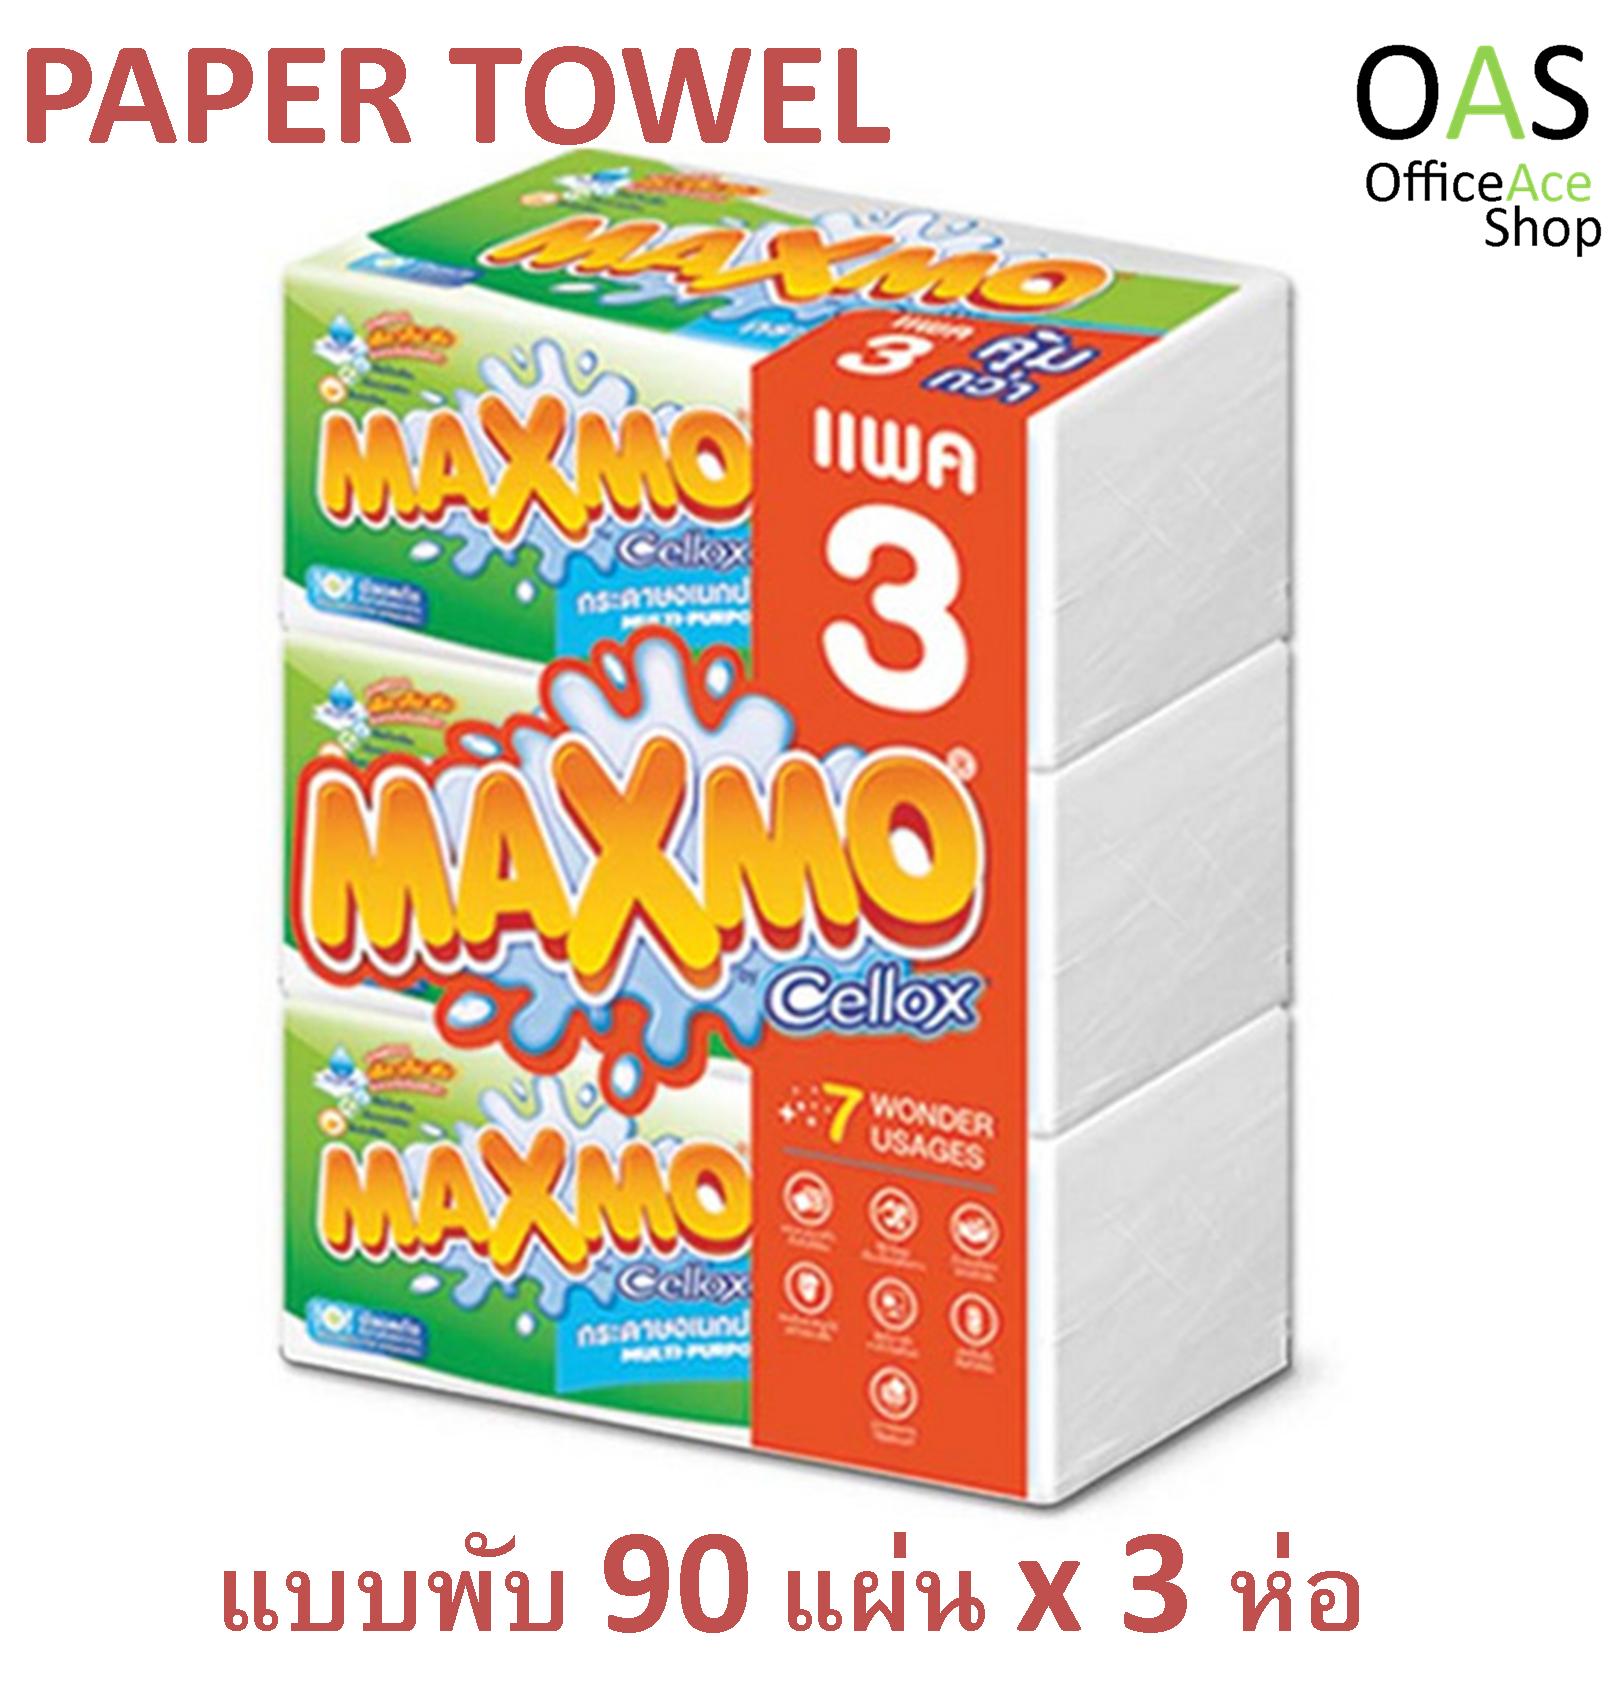 MAXMO Paper Towel กระดาษอเนกประสงค์ แม็กซ์โม่ แบบพับ 90 แผ่น x 3ห่อ